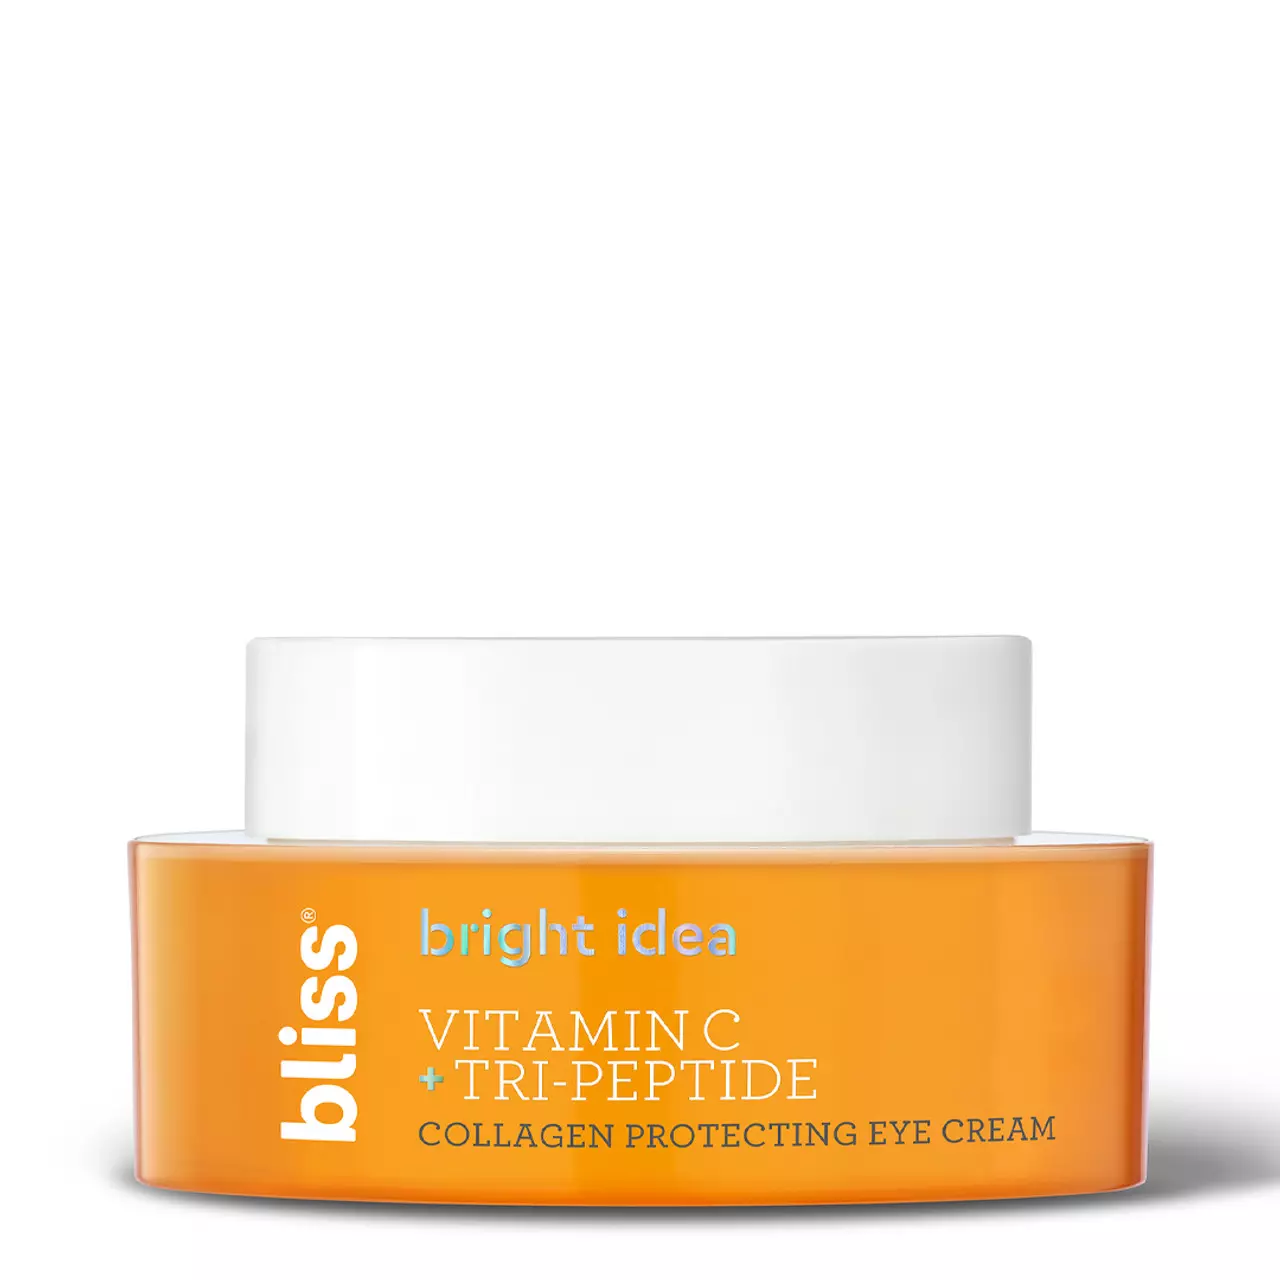 Bliss Bright Idea Vitamin C & Tri-Peptide Collagen-Protecting & Brightening Skin Care | Brightens Skin, Diminishes Dark Spots & Visibly Firms | Clean | Paraben Free | Cruelty-Free | Vegan (Eye Cream)